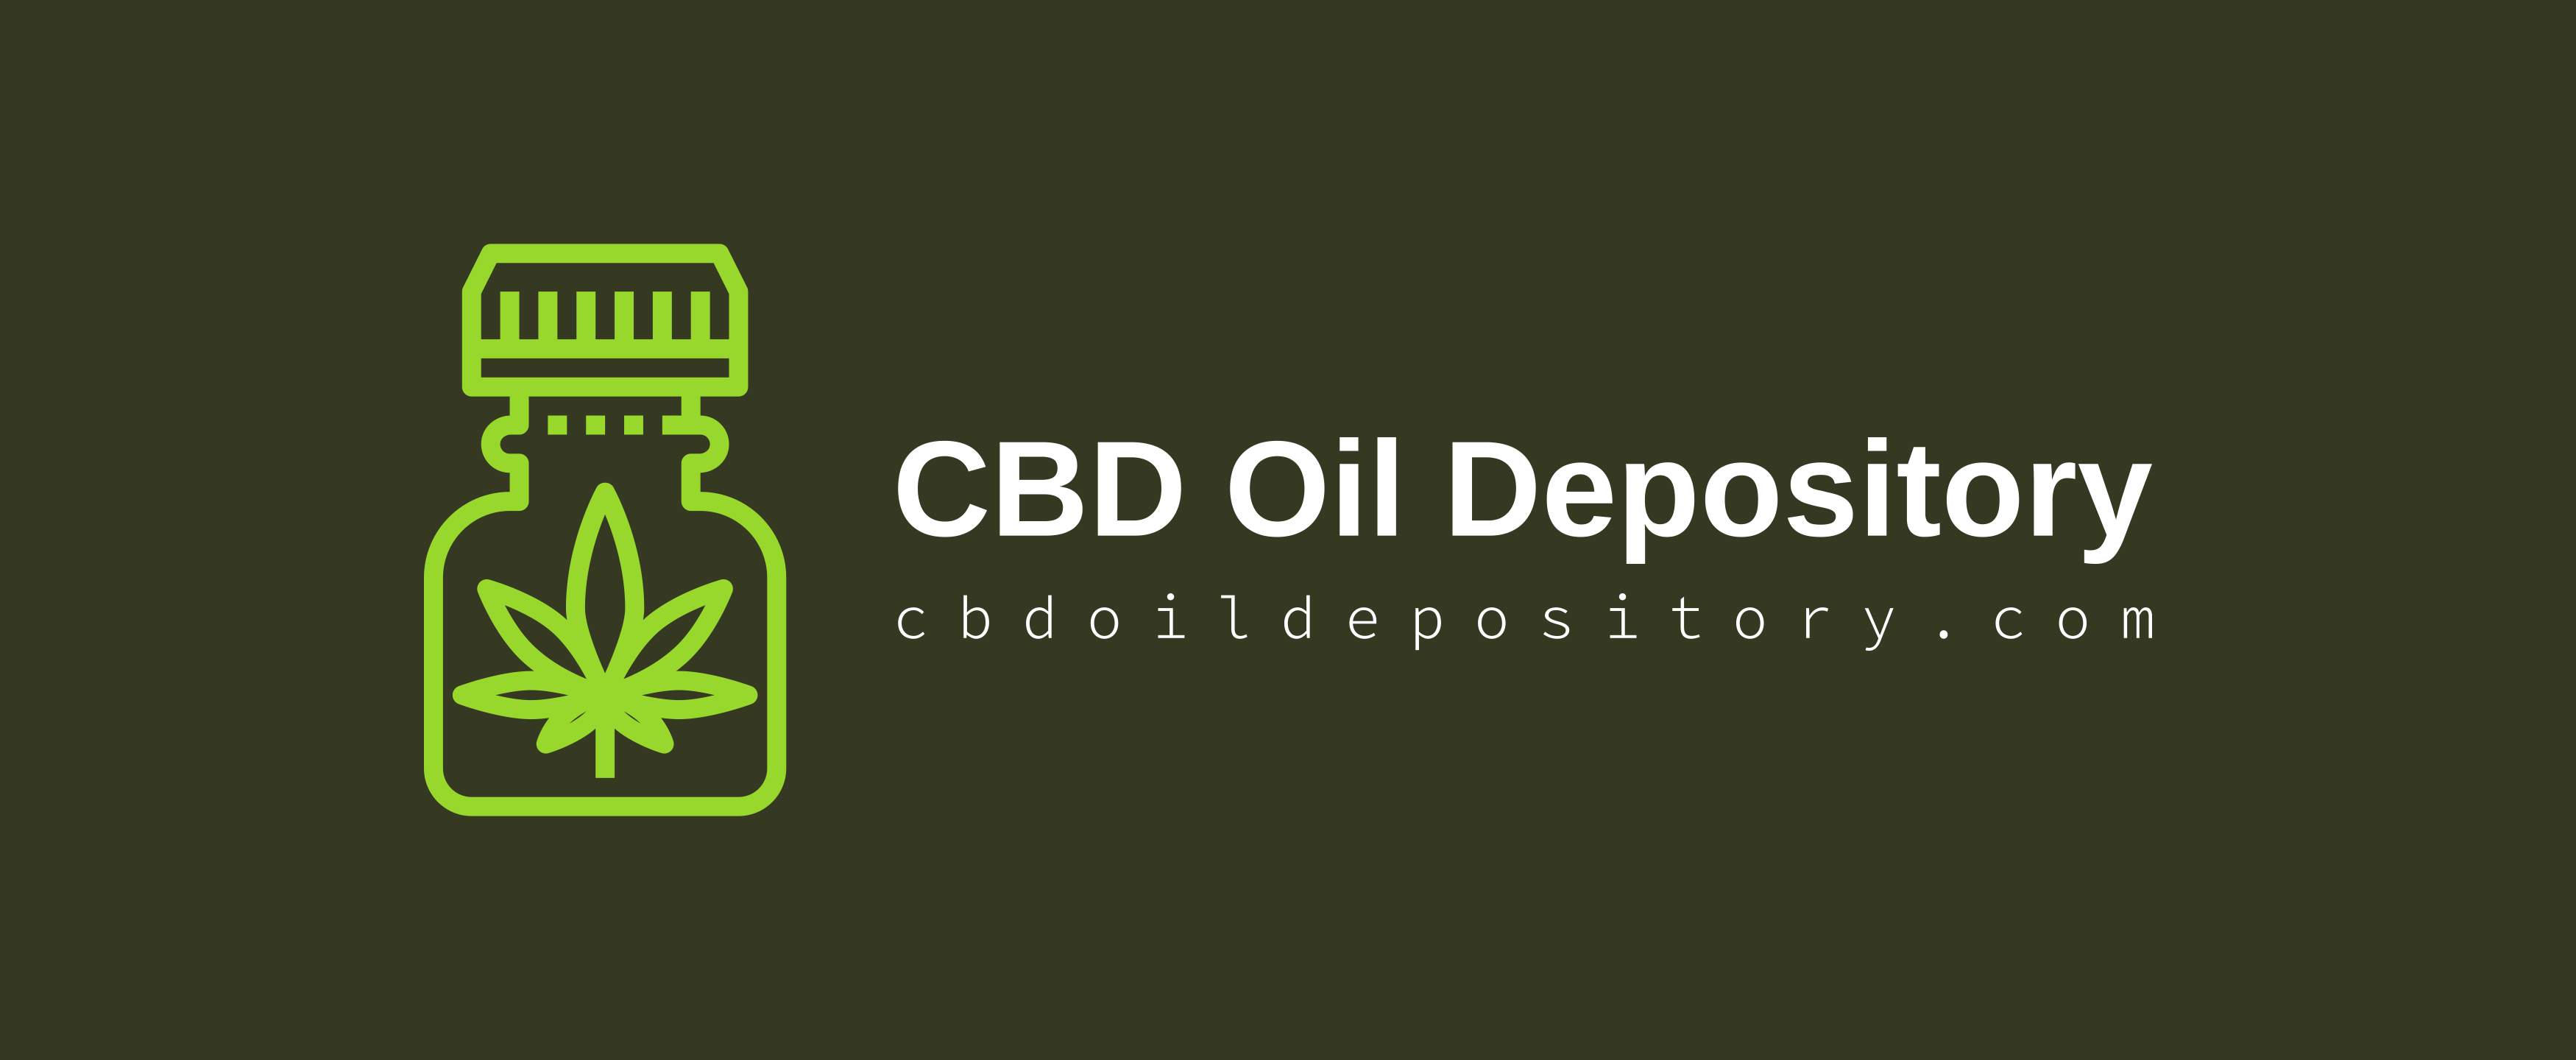 CBD Oil Depository